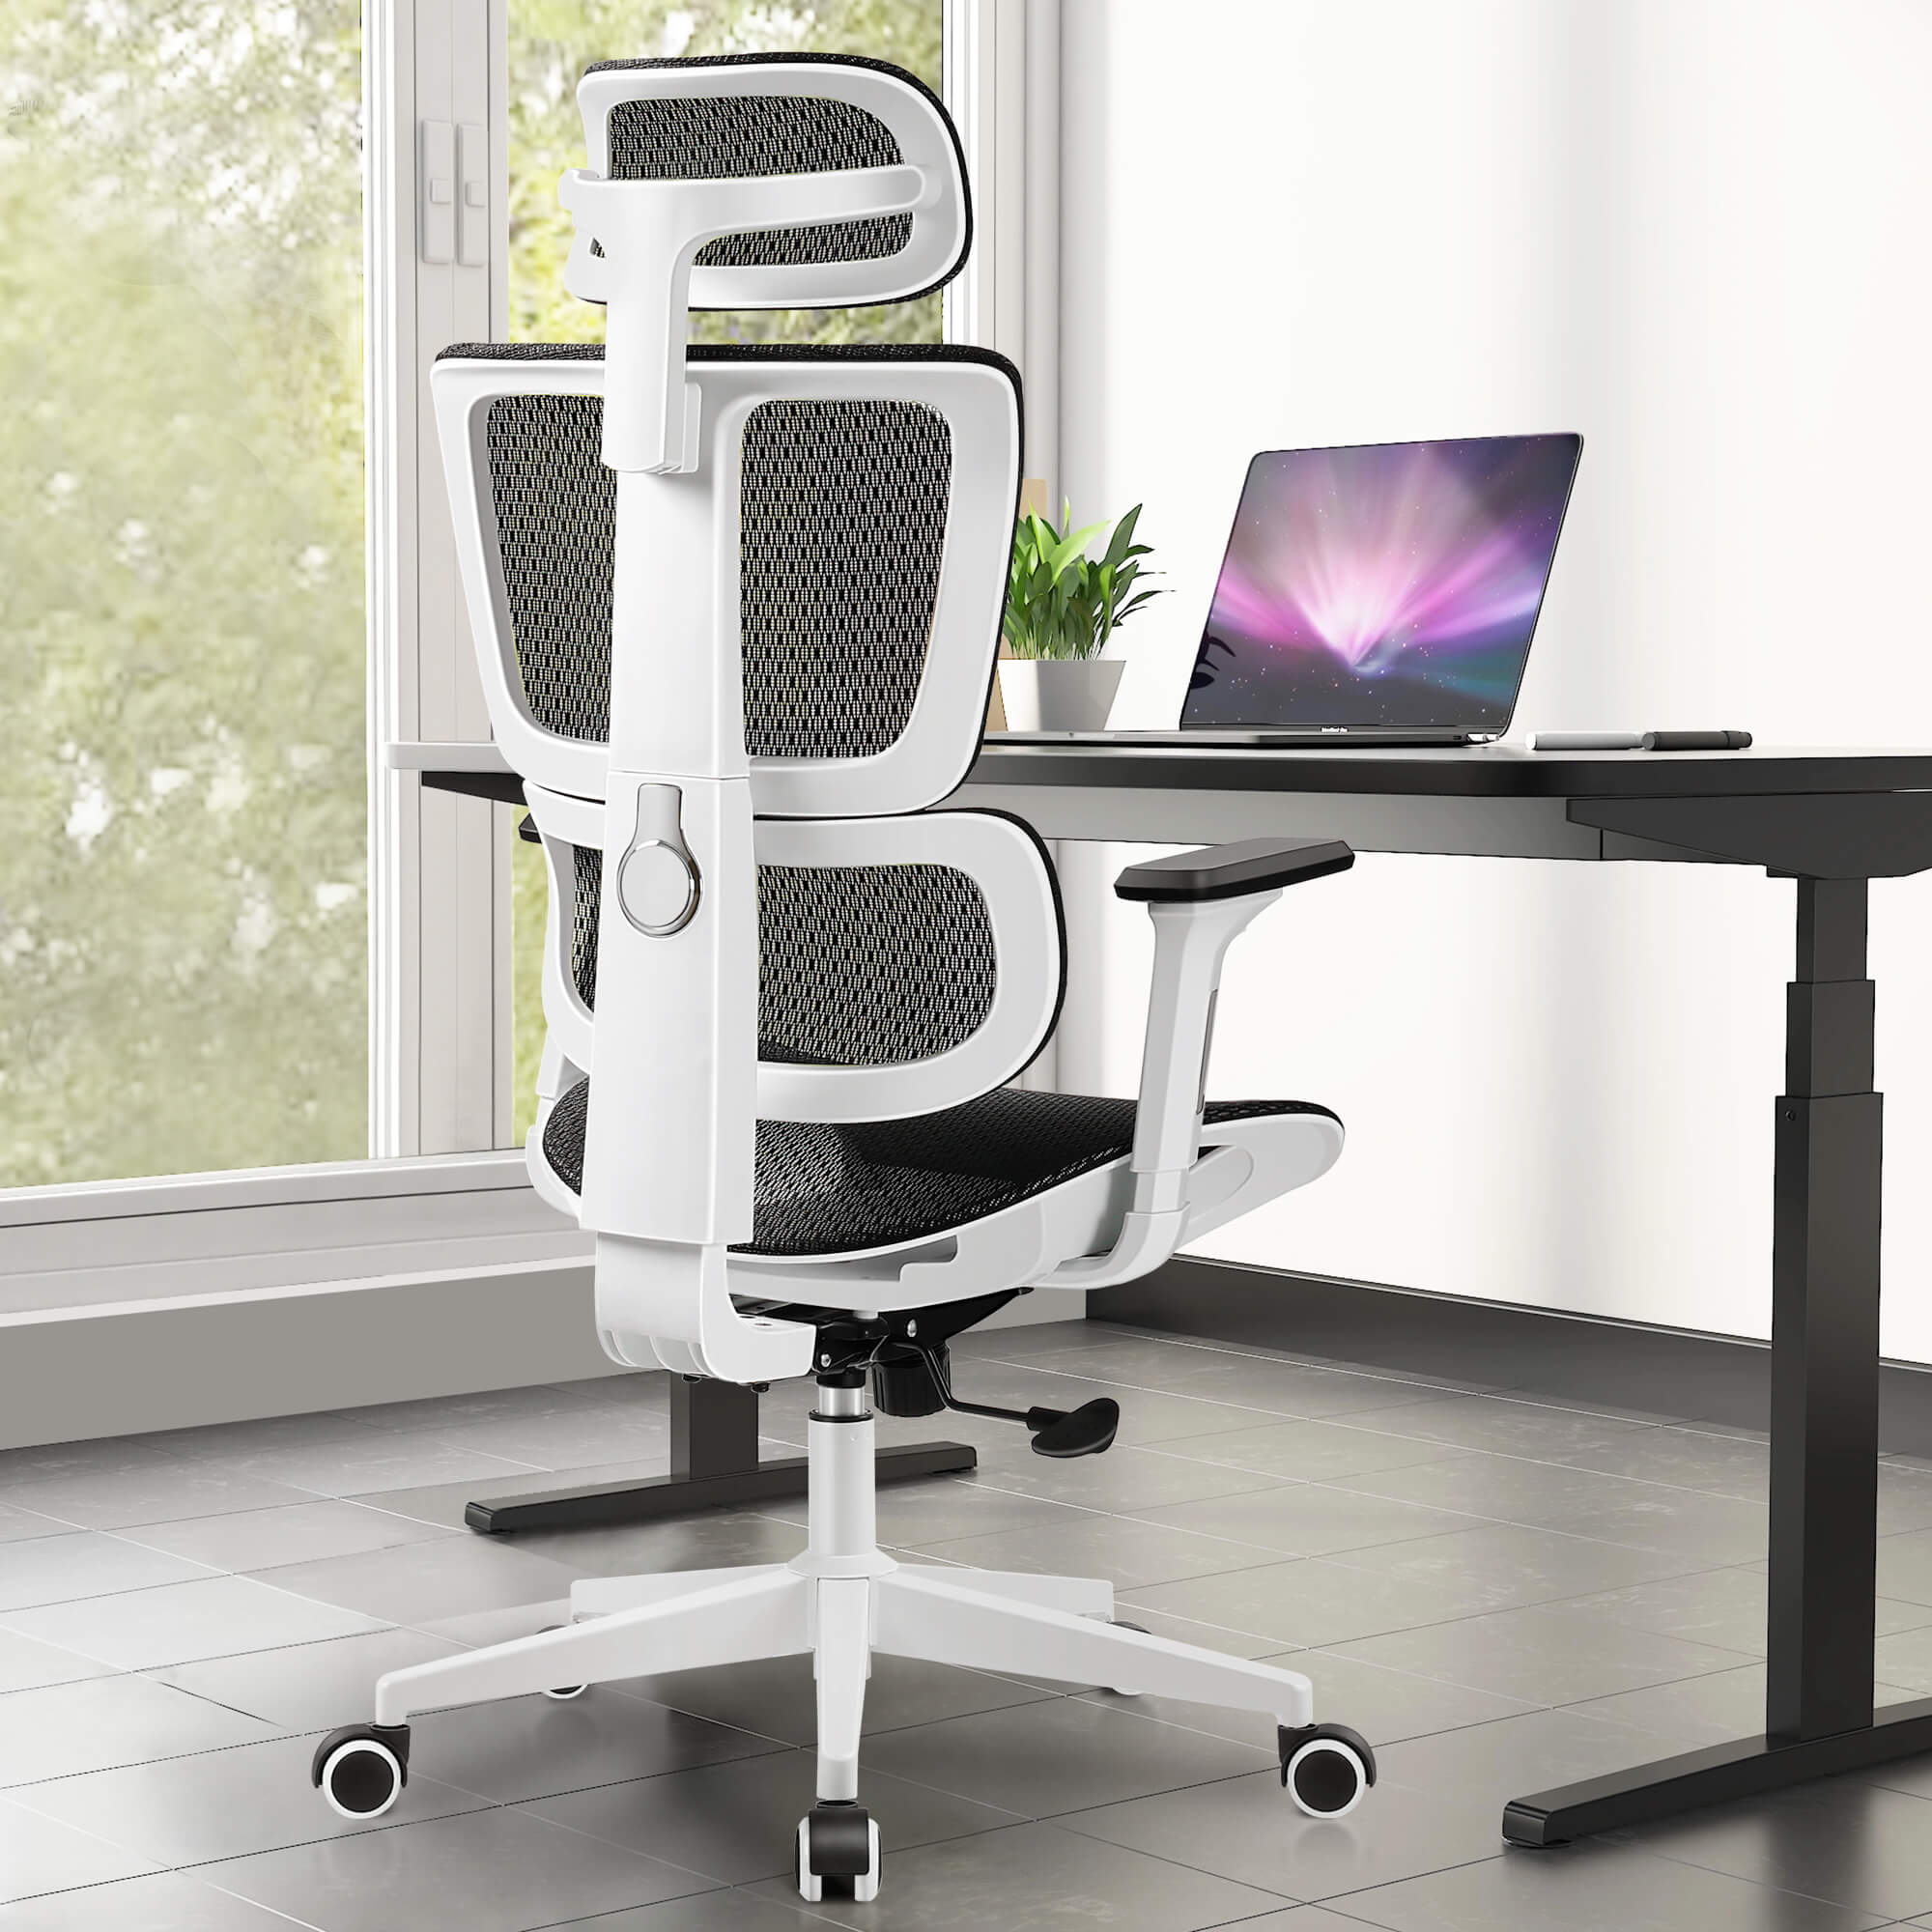 KERDOM Ergonomic Office Chair With 3D Adjustable Backrest